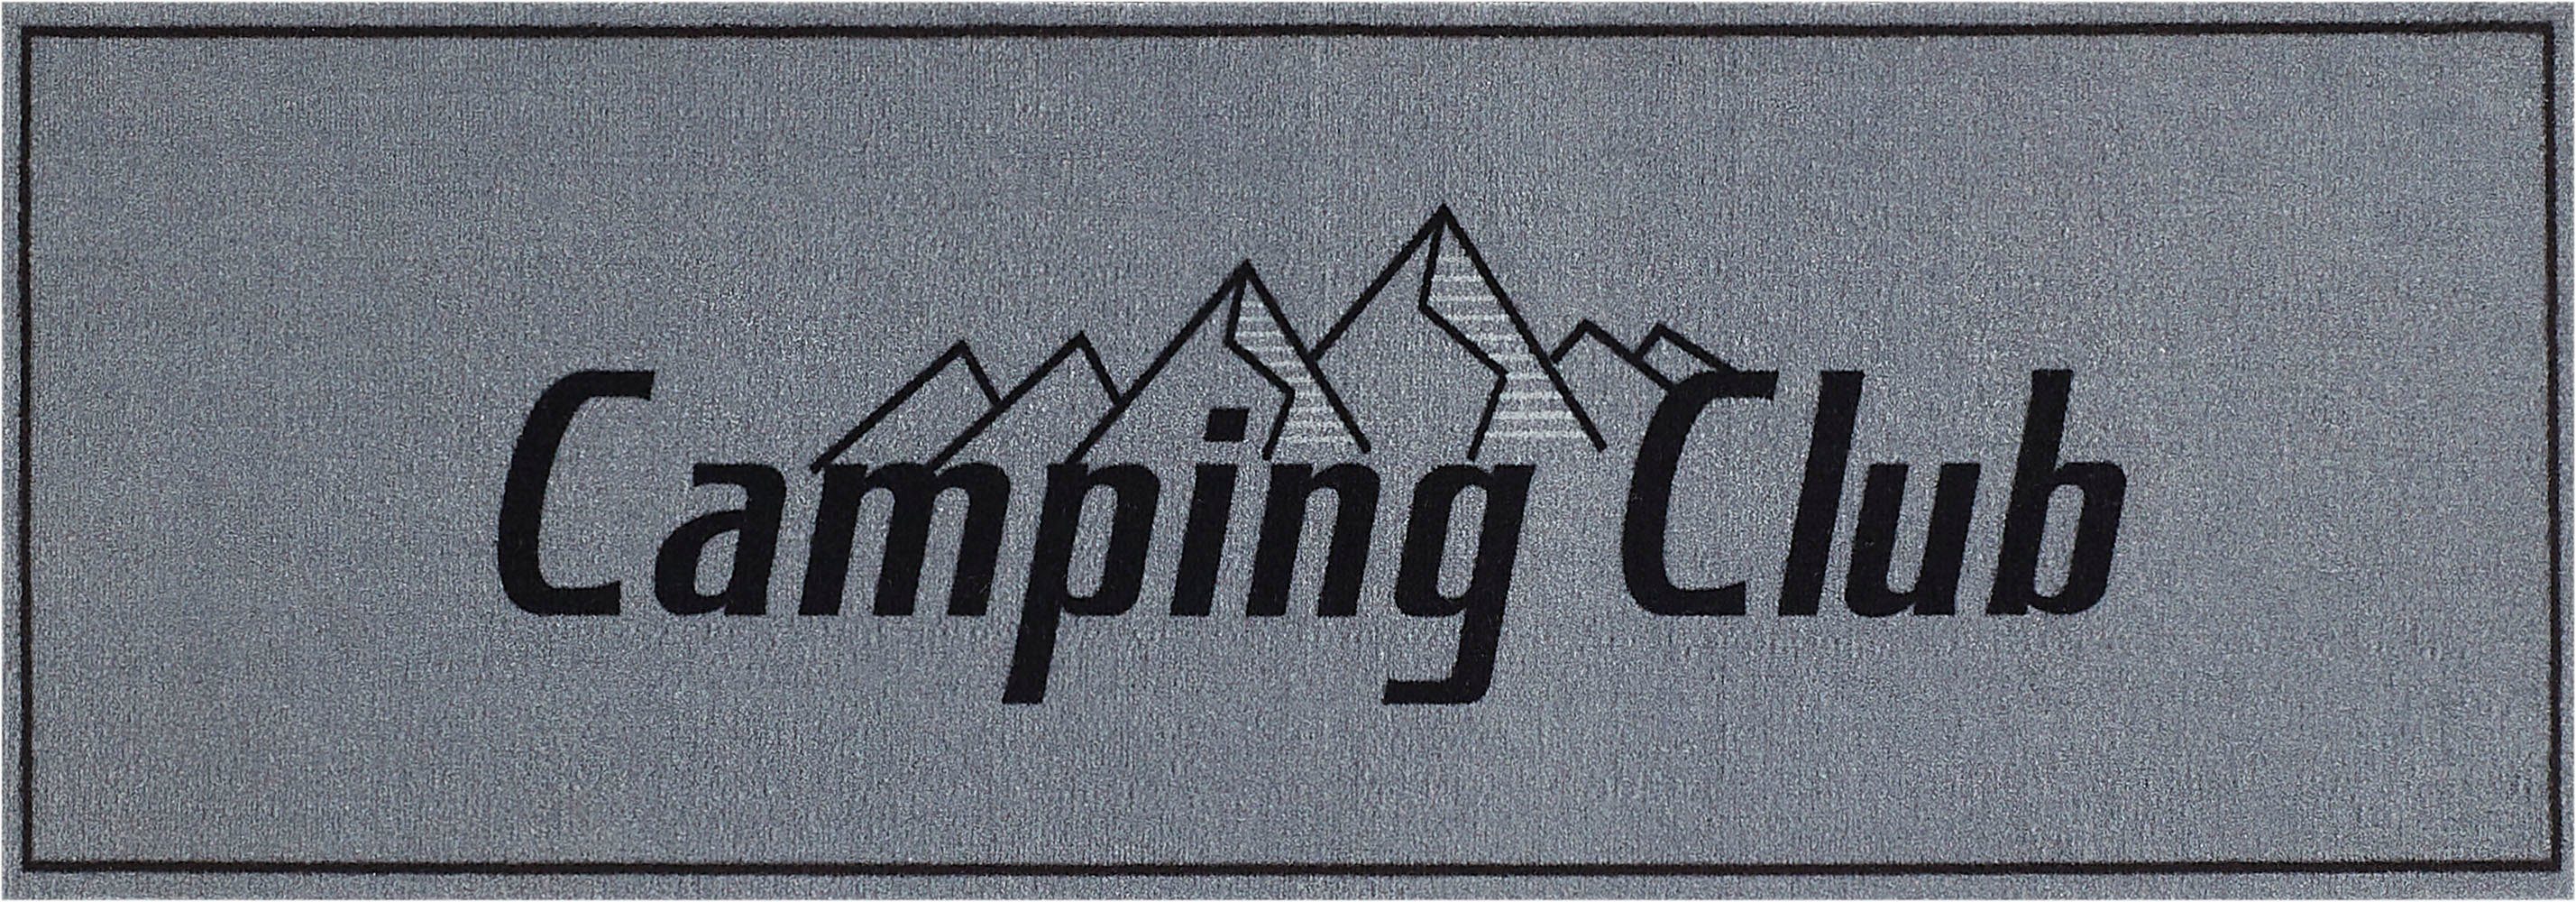 my home Loper Camping Club